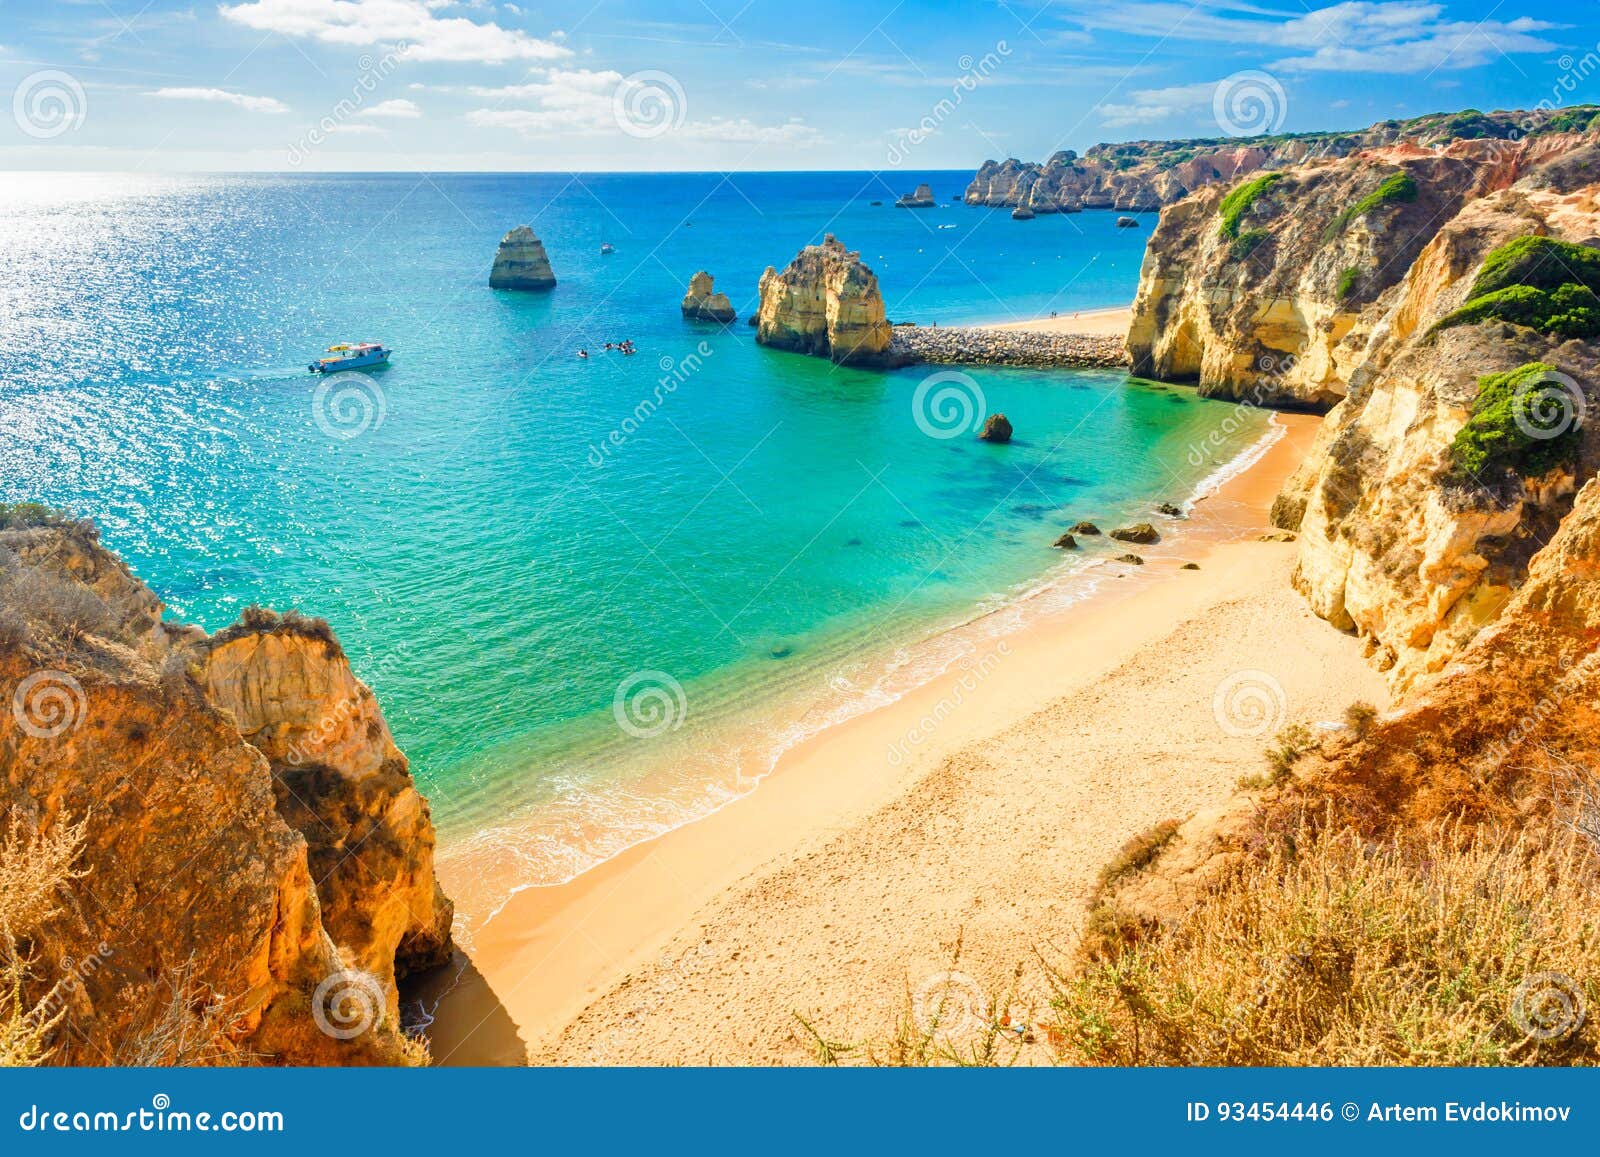 beautiful sandy beach near lagos in panta da piedade, algarve, portugal